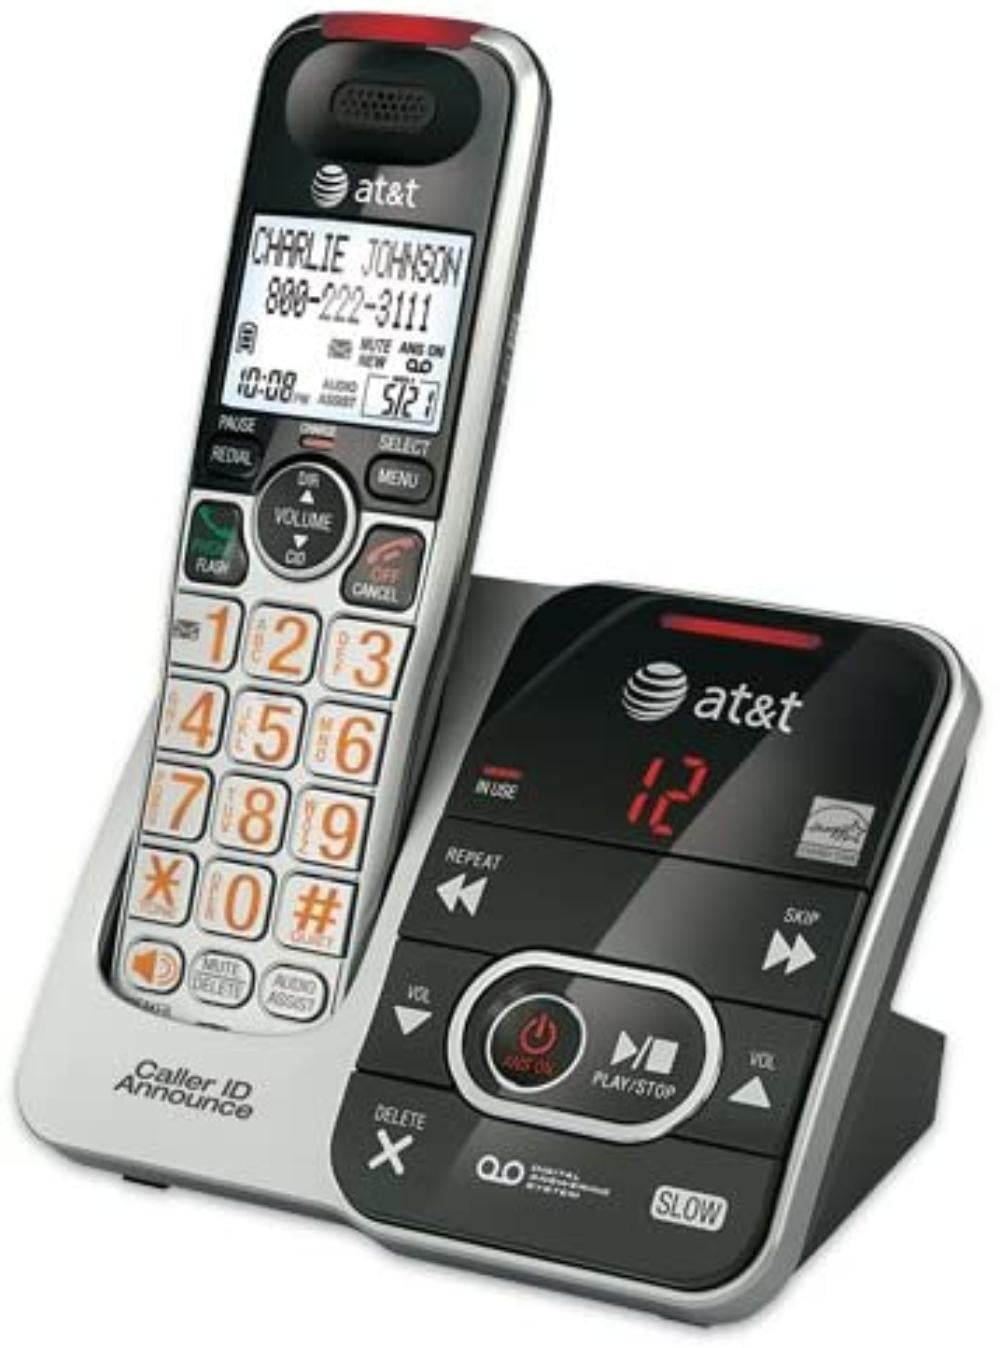 Gigaset Gigaset-c530h Accessory Handset Only for Cordless Phone for sale online 